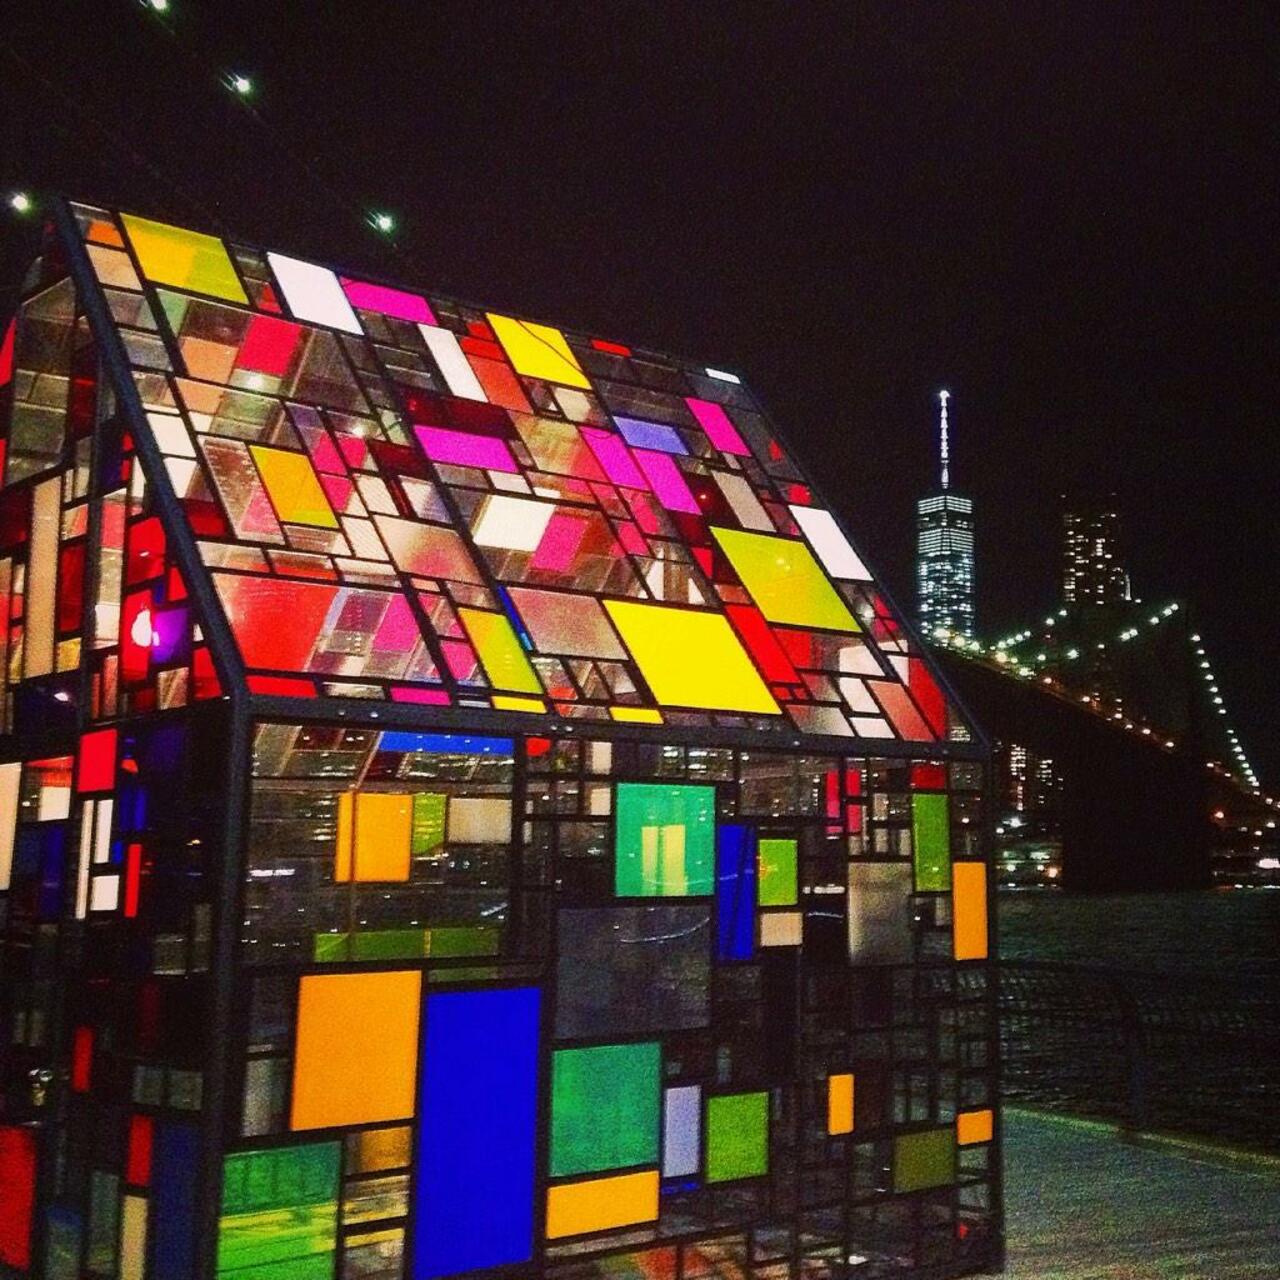 #tomfruin #stainedglass house #art installation #Brooklynbridge #park #brooklyn #EatUpNewYork #newyork http://t.co/Eropbfwedi